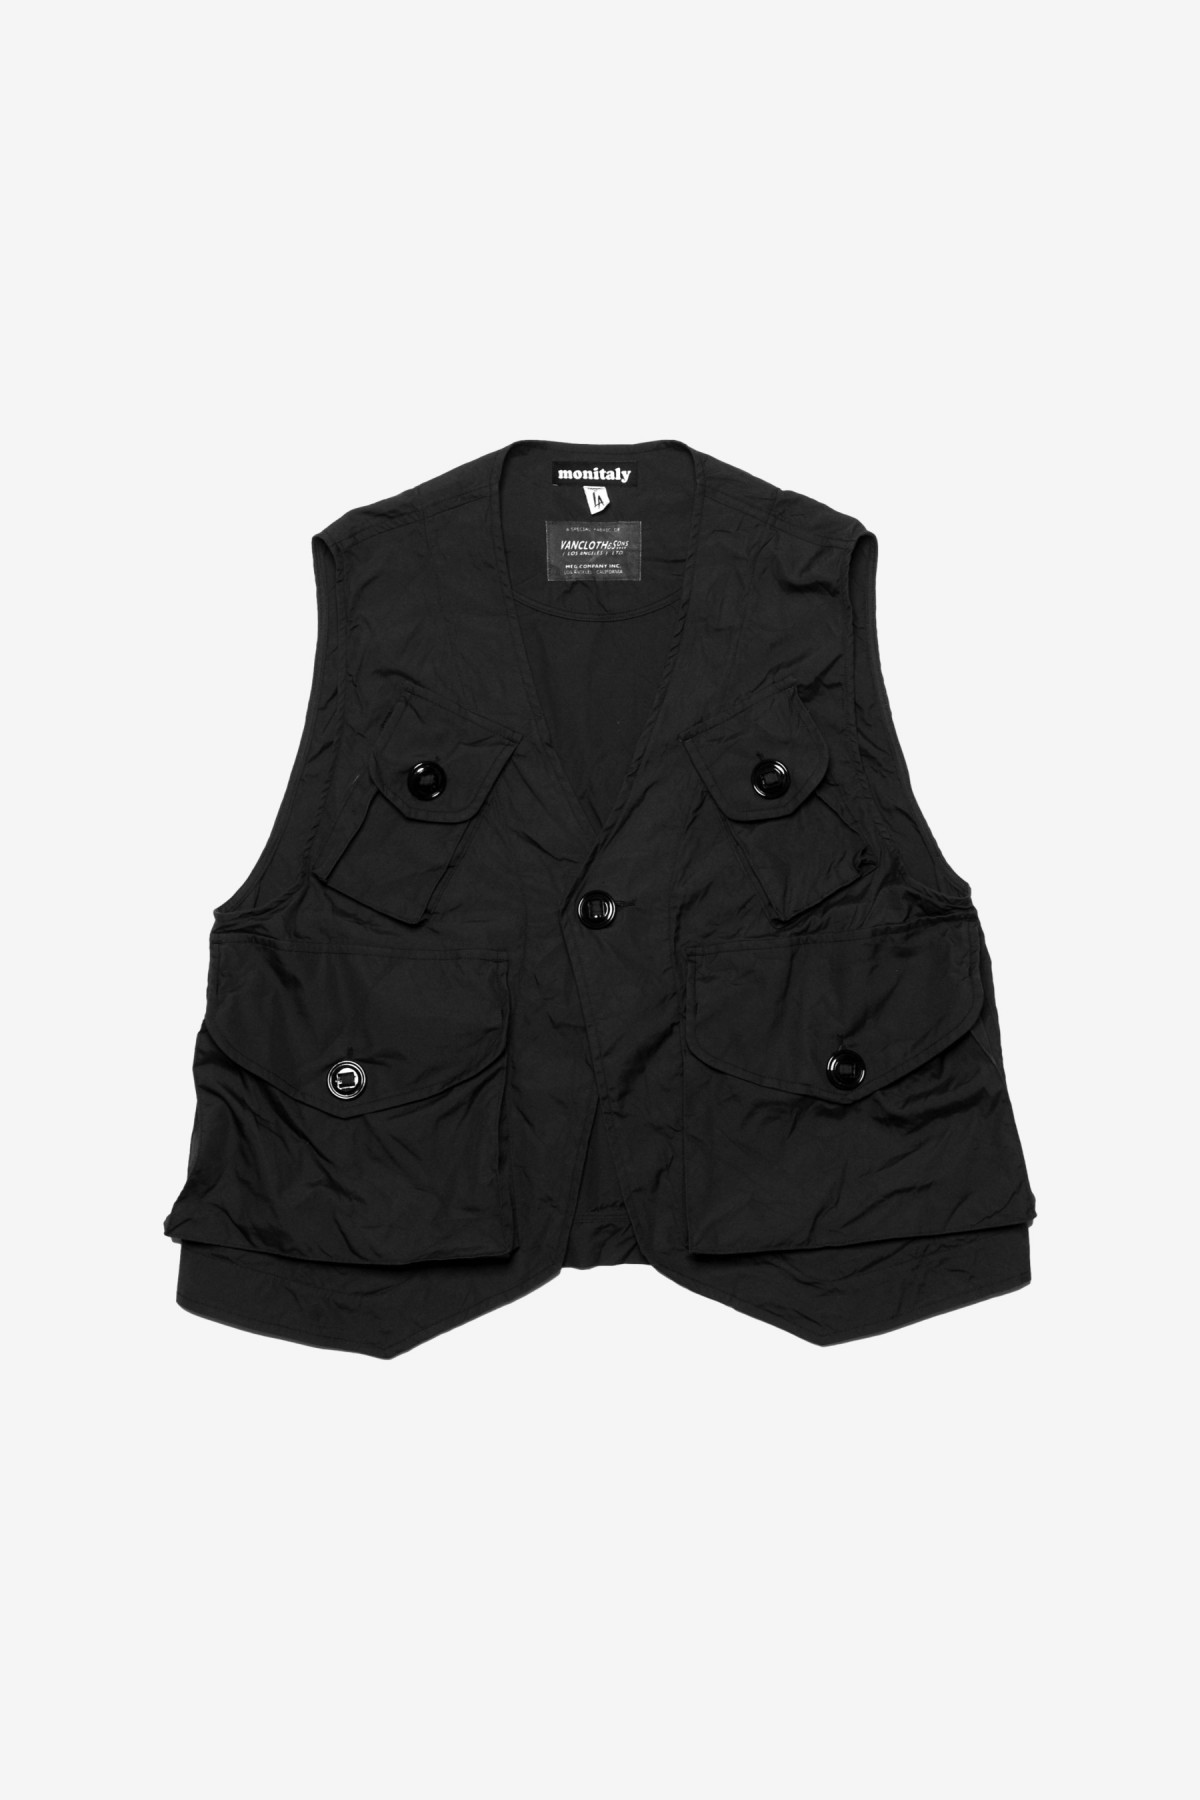 Monitaly Military Vest Type-C in Vancloth Oxford Black